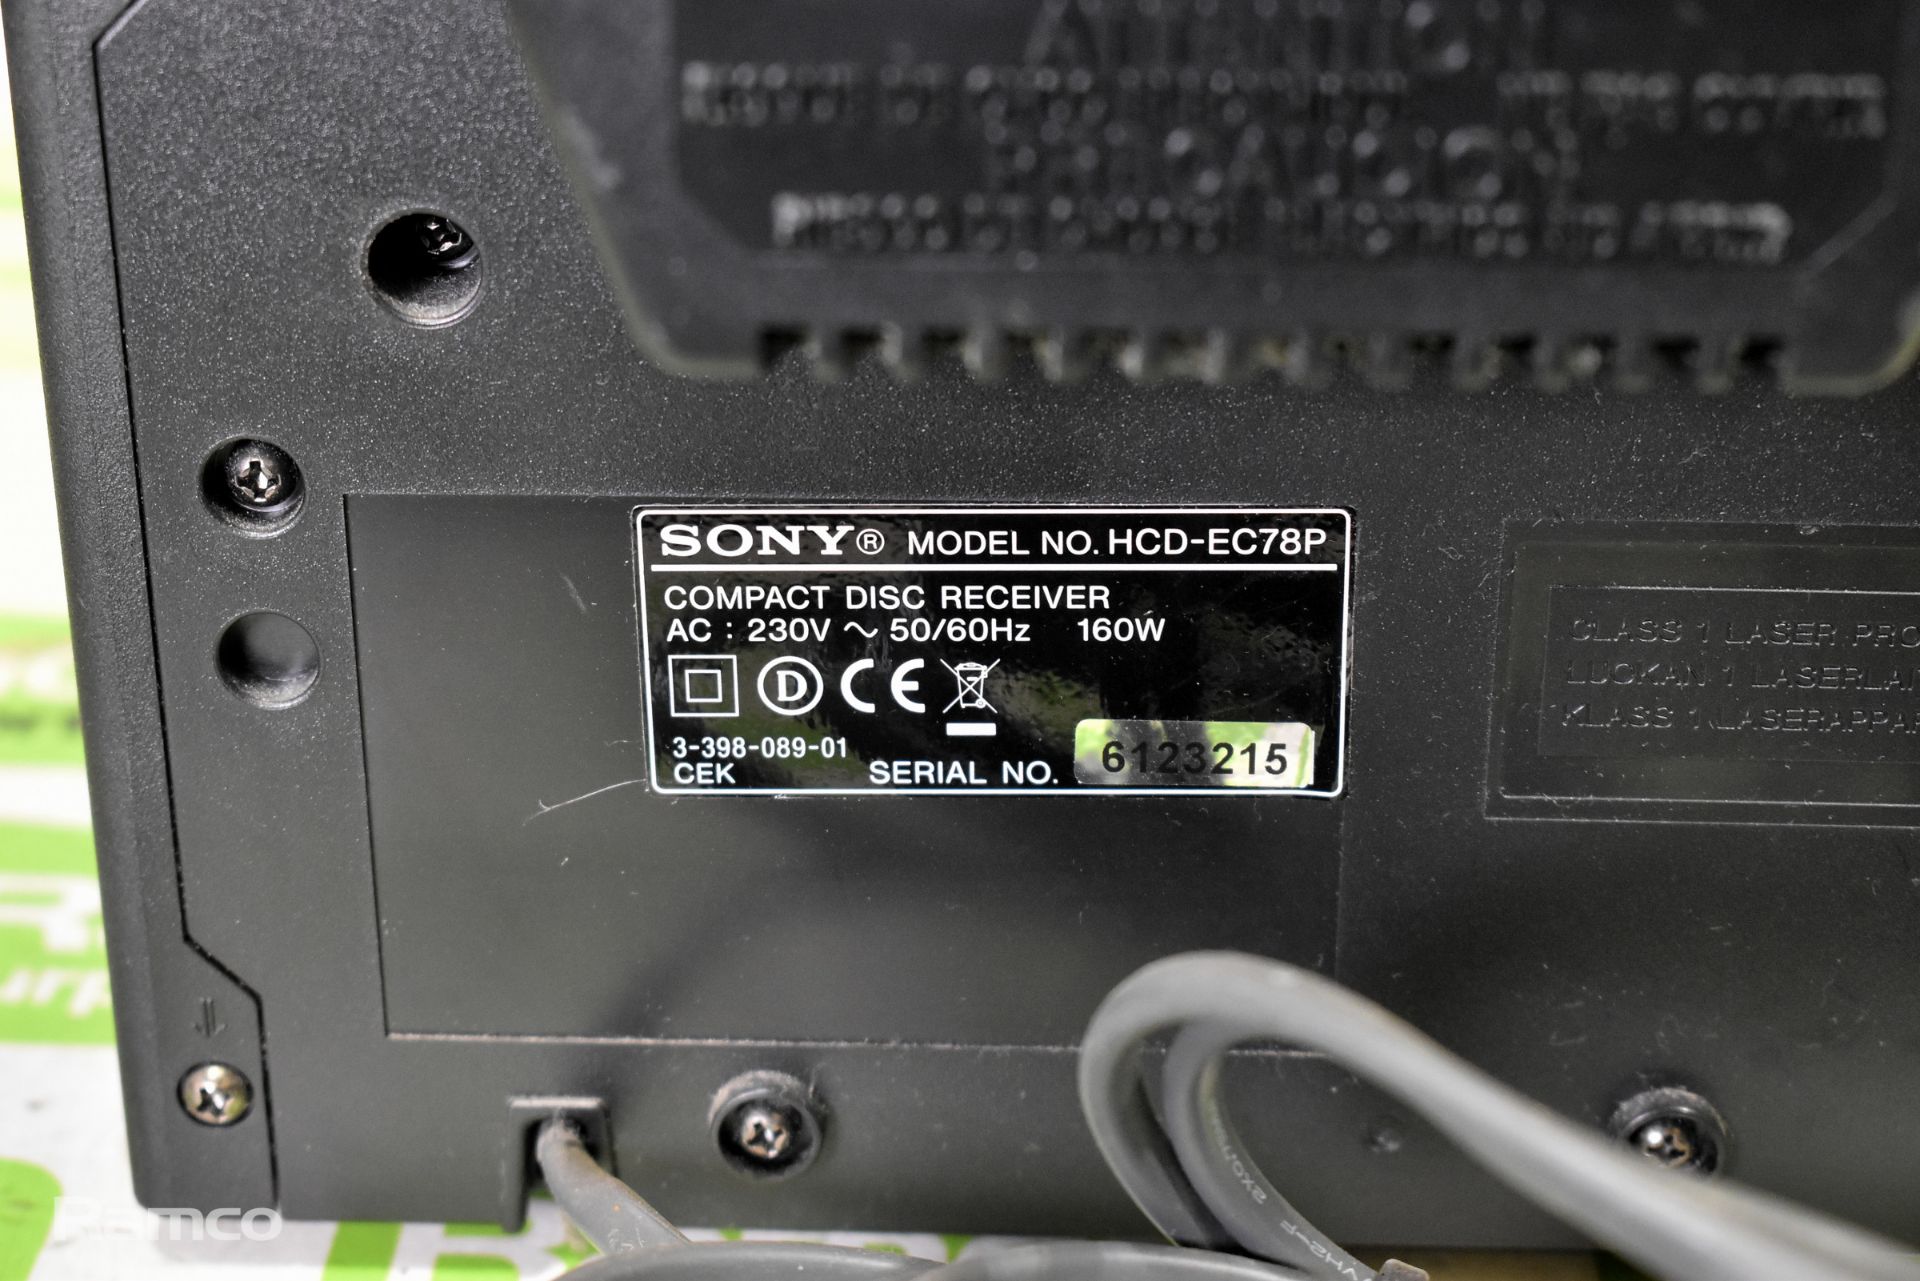 Sony HDC-EC78P mini HI-FI component music system - Image 4 of 6